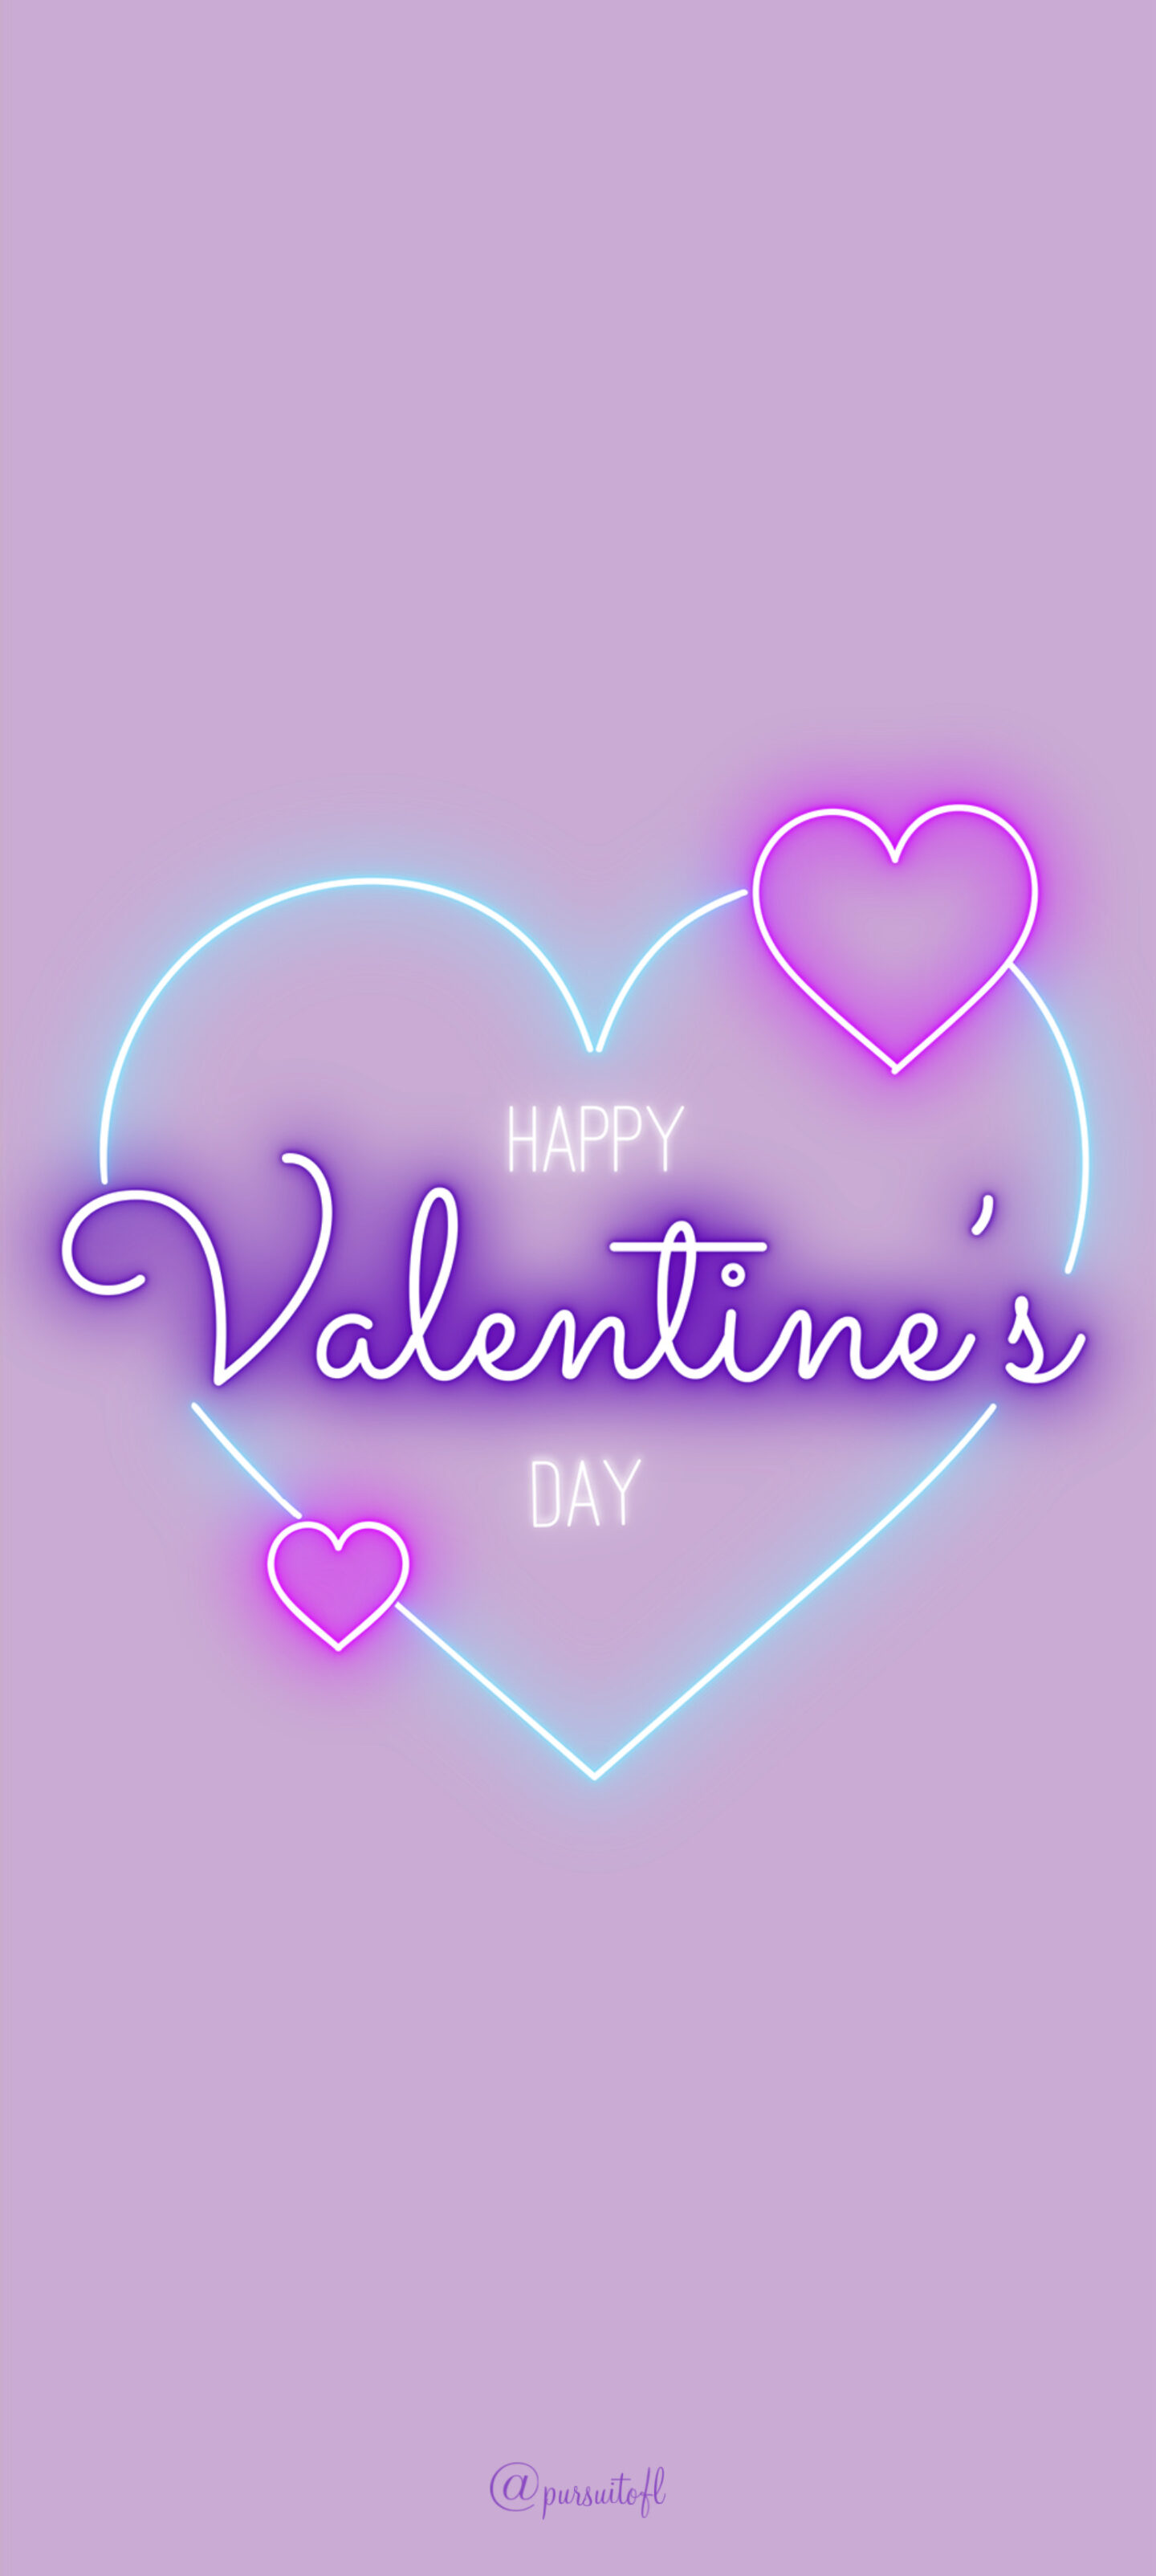 Purple Phone Wallpaper with Happy Valentine's Day text and hearts; Valentine's Day Wallpaper